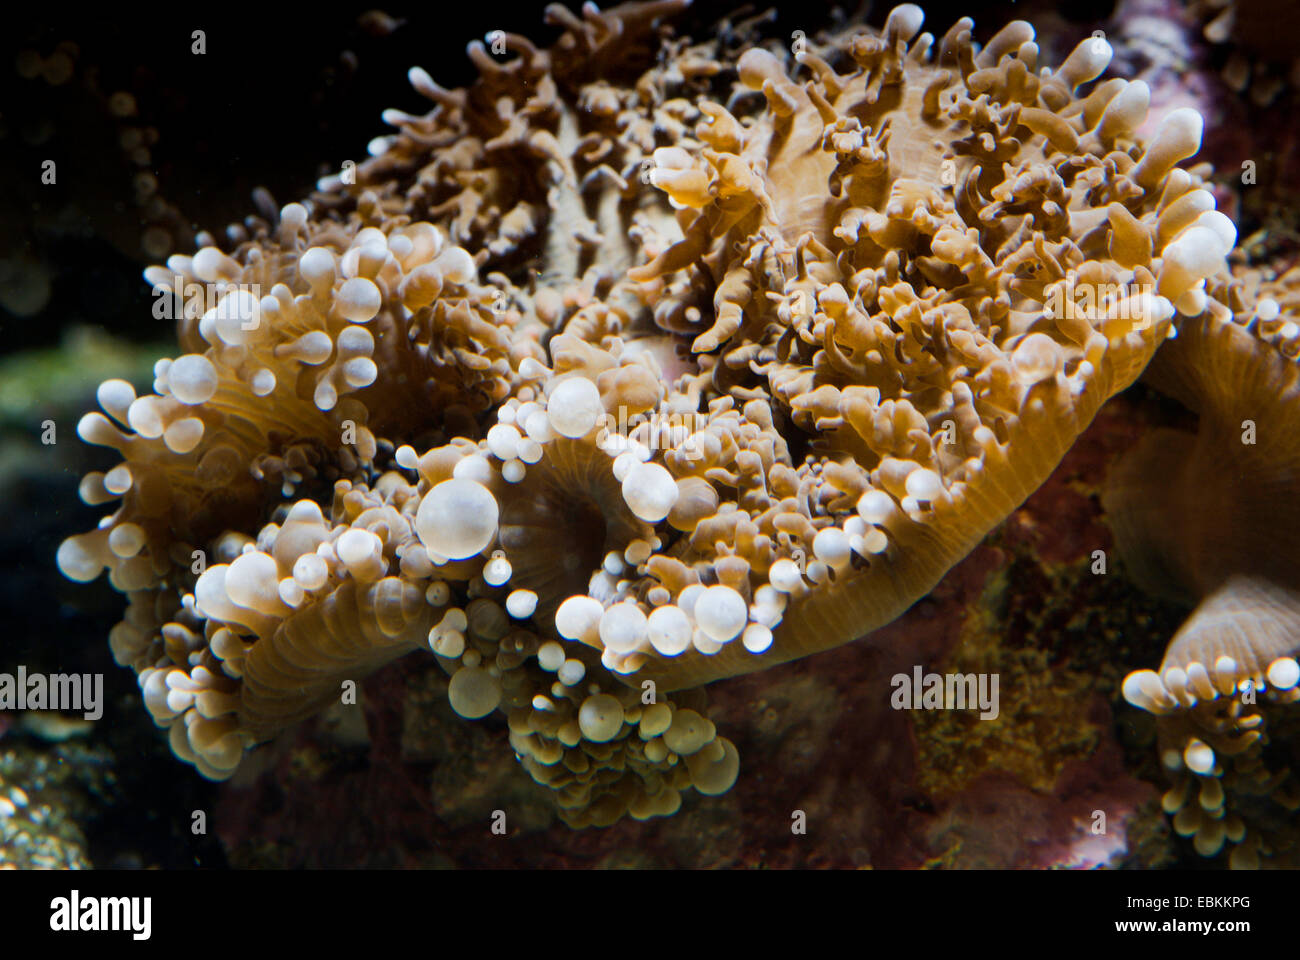 Mushroom Anemone (Rhodactis spec.), close-up view Stock Photo